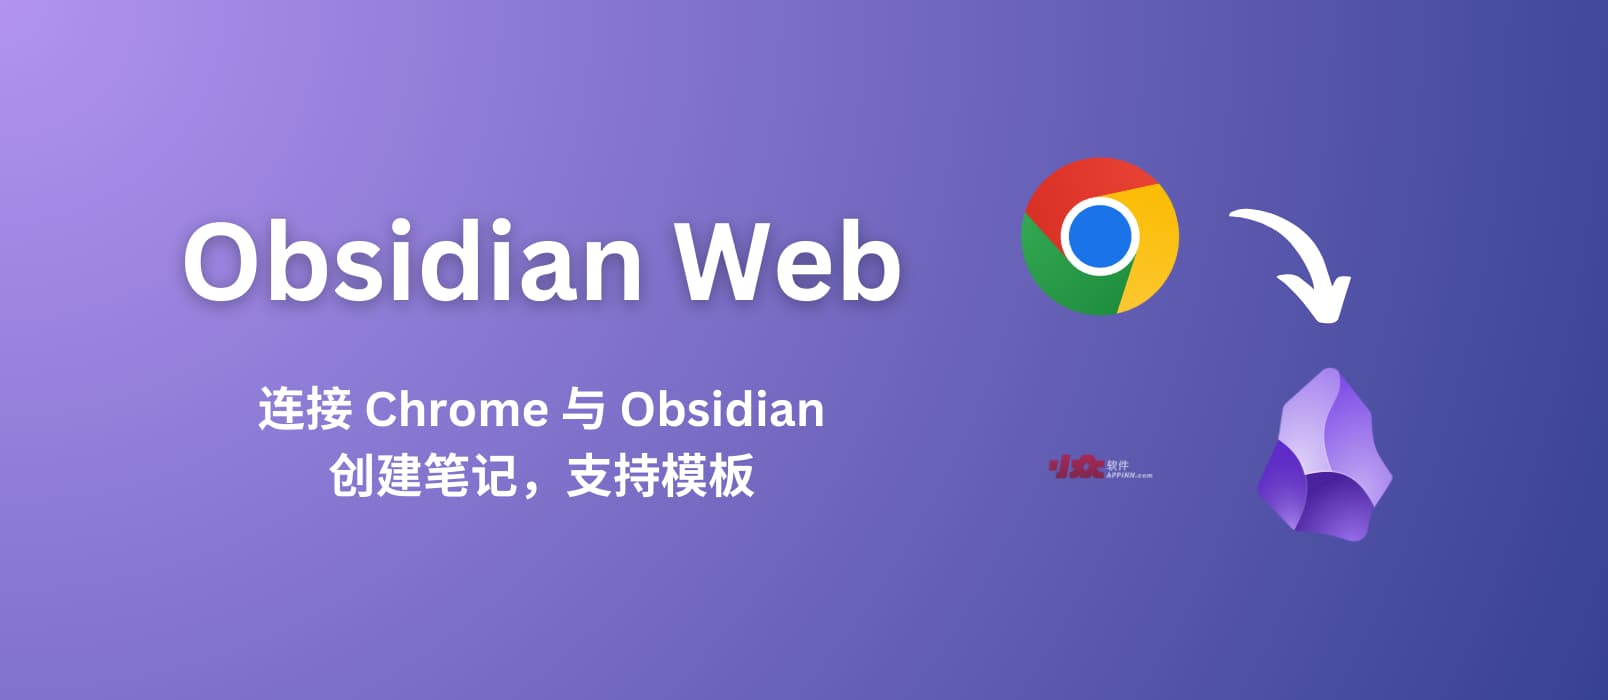 Obsidian Web - 连接 Chrome 与 Obsidian，创建笔记，支持模板